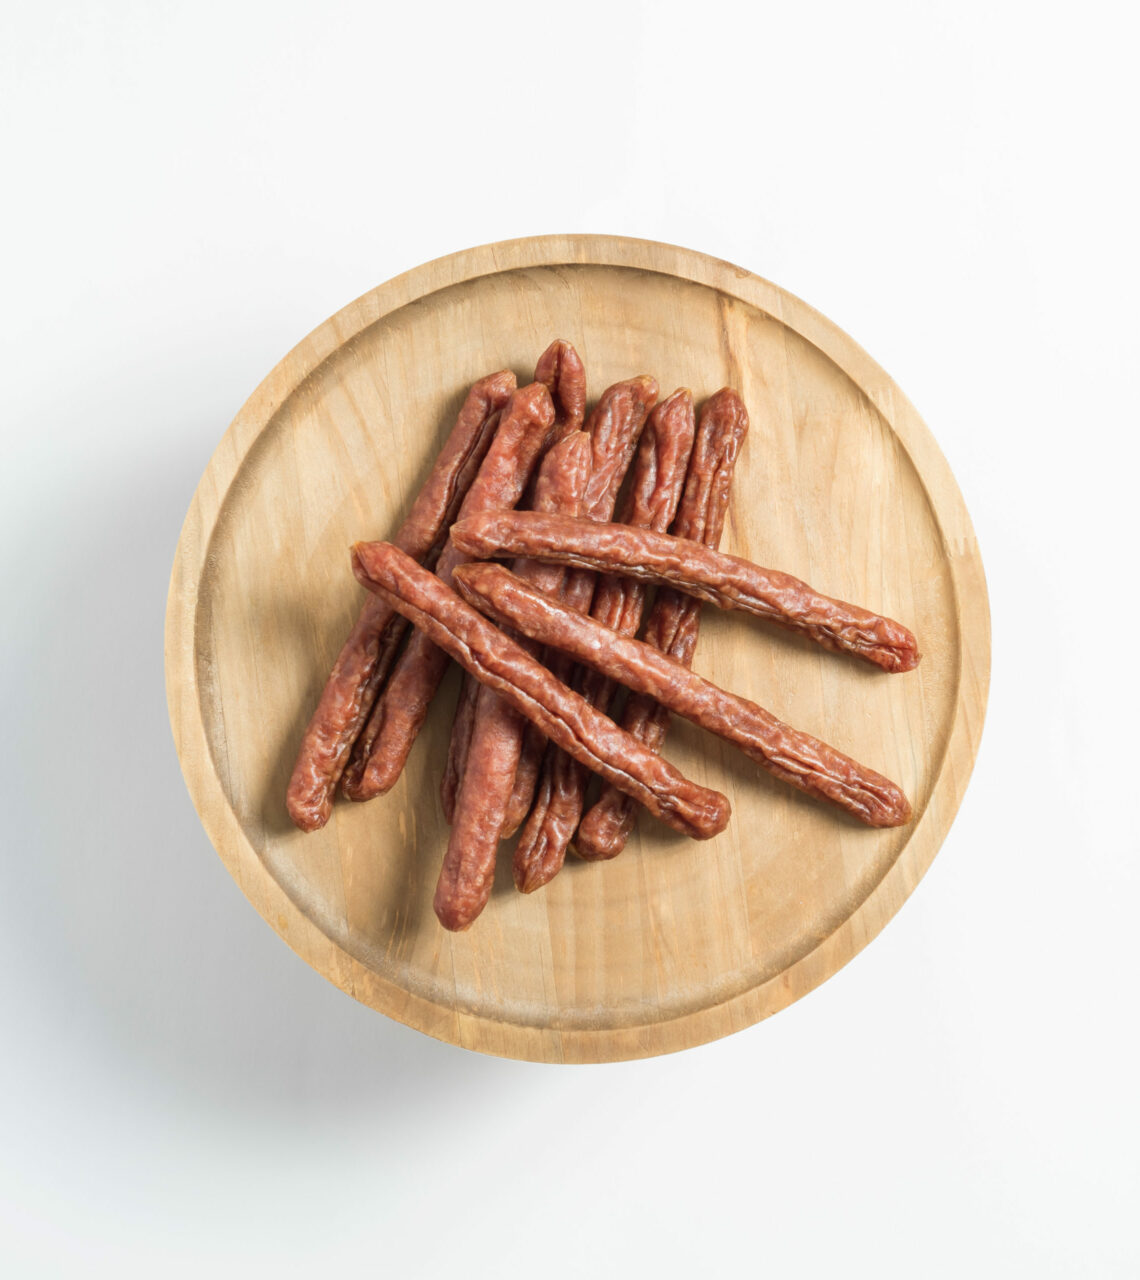 Rawbone Pork Treats – 200g